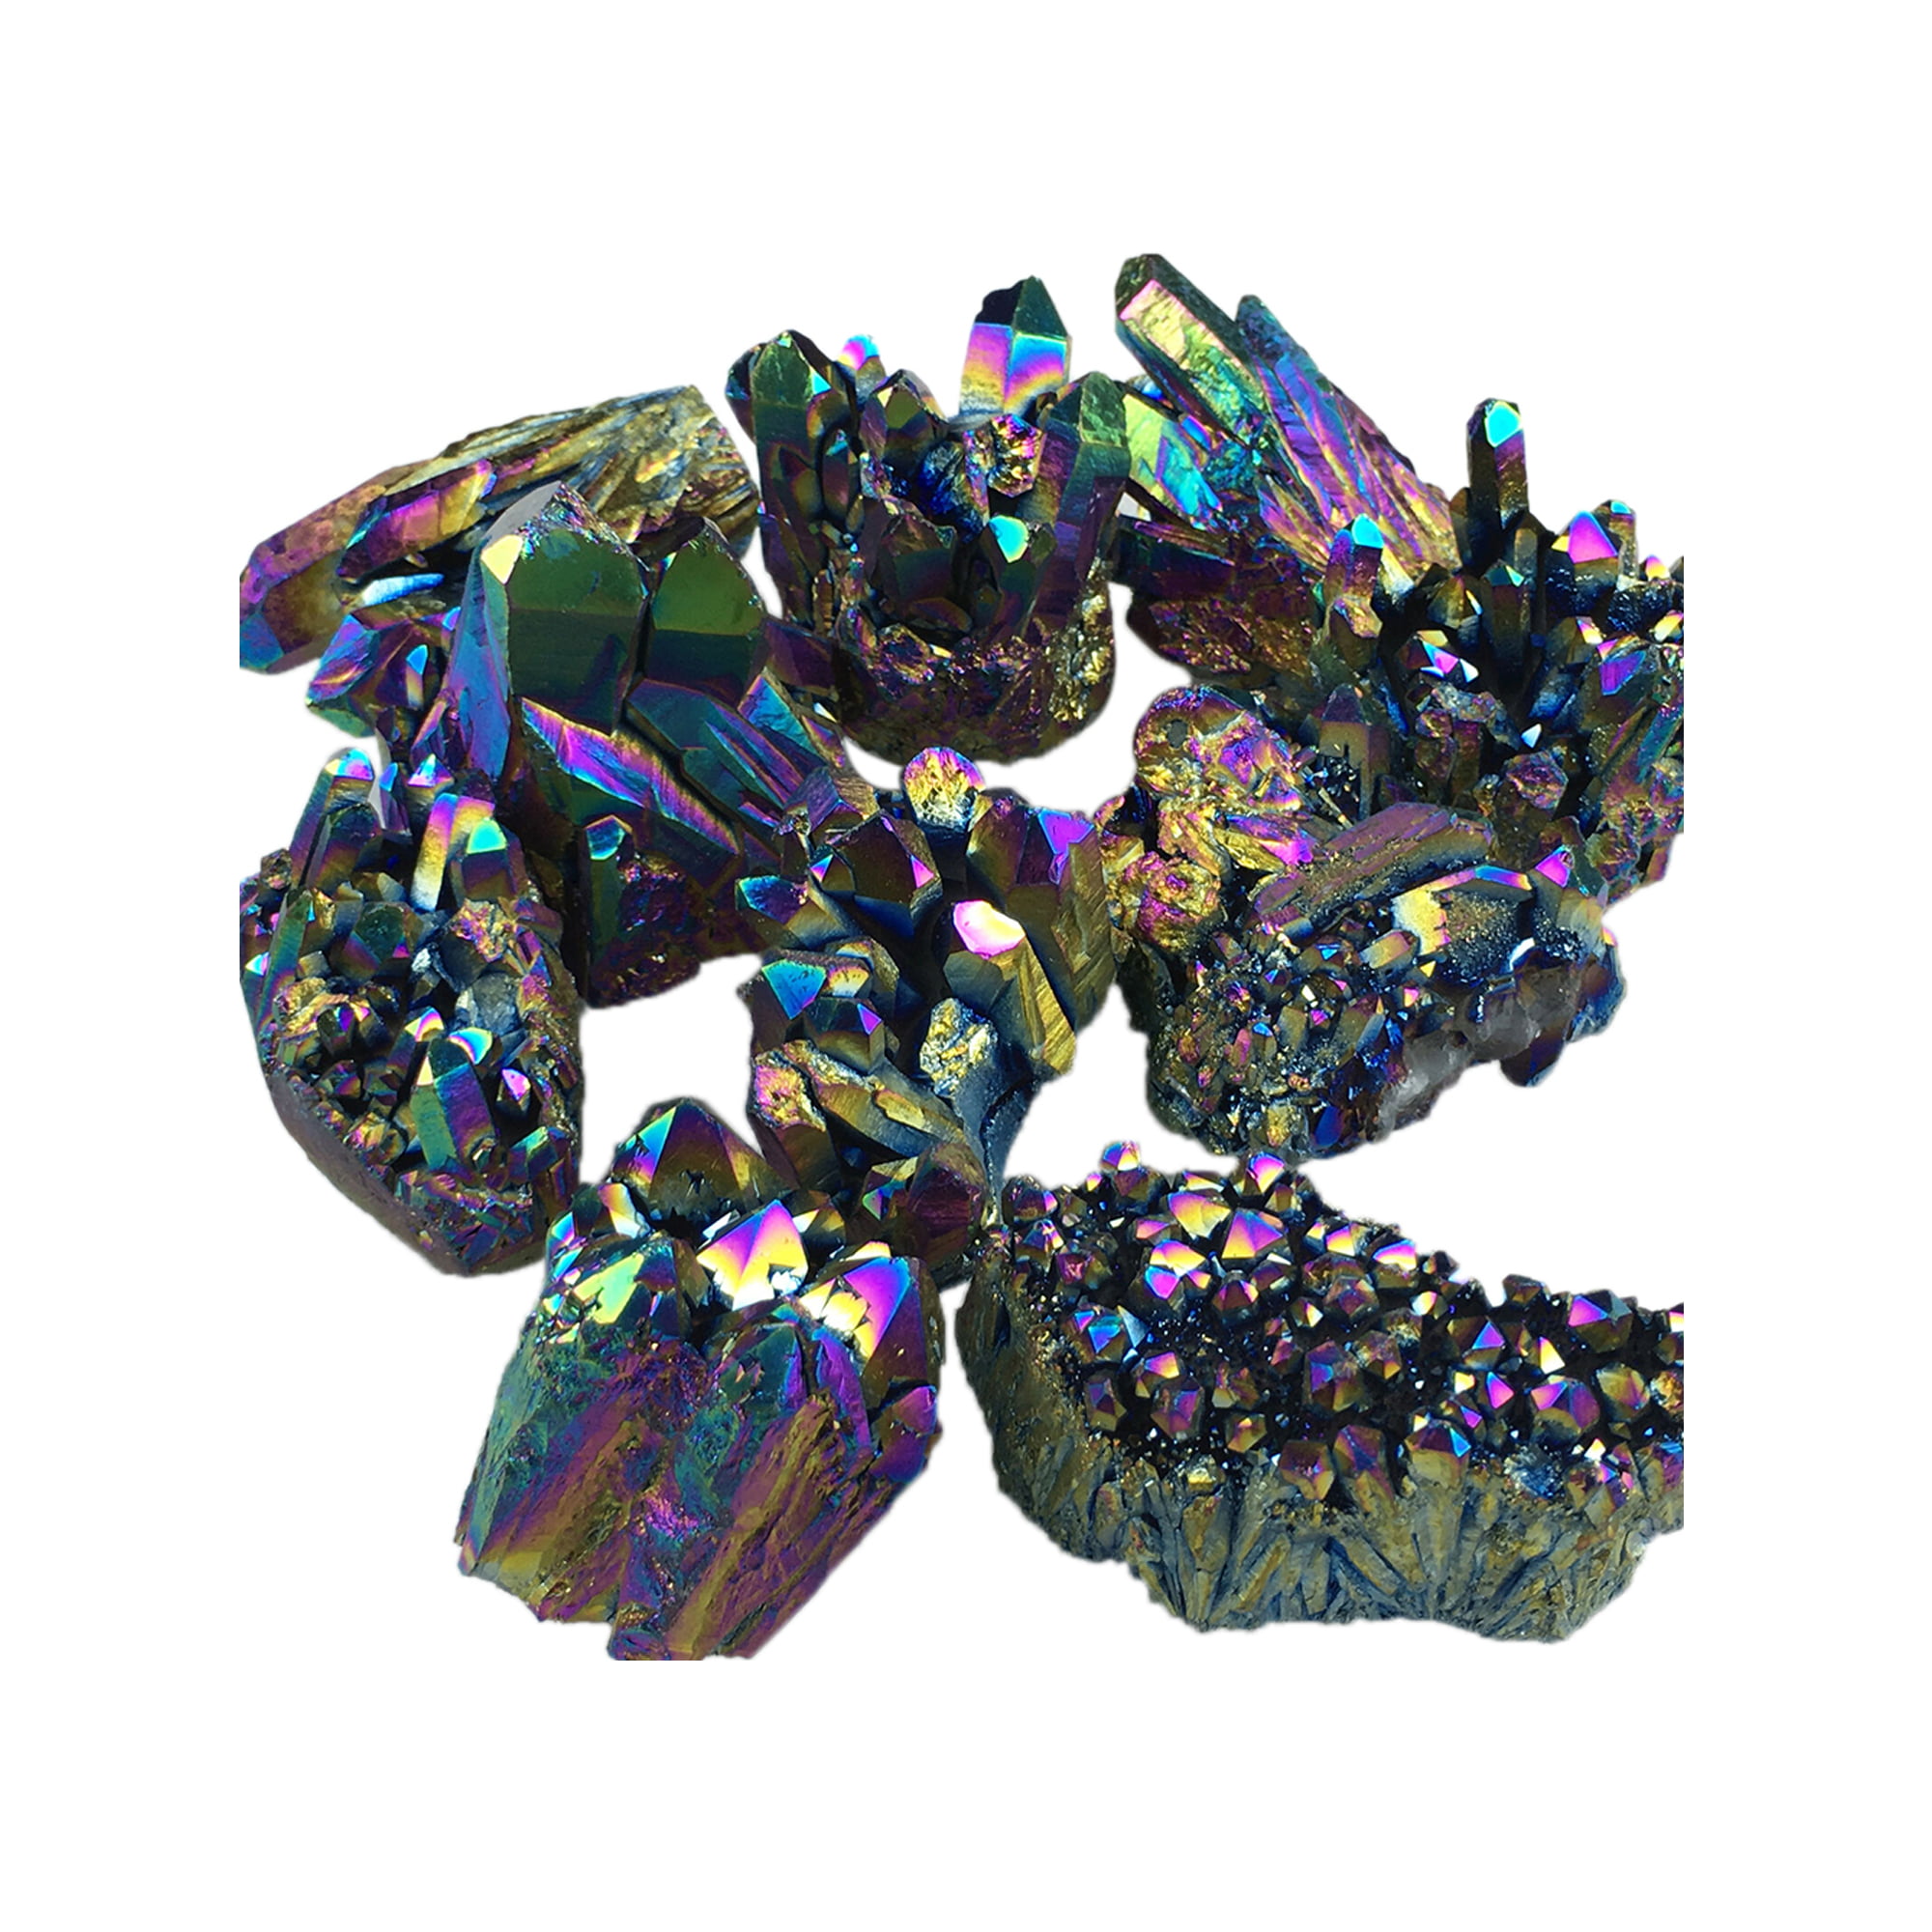 Top Quartz Crystal Rainbow Titanium Cluster VUG Mineral Specimen Healing US GIFT 